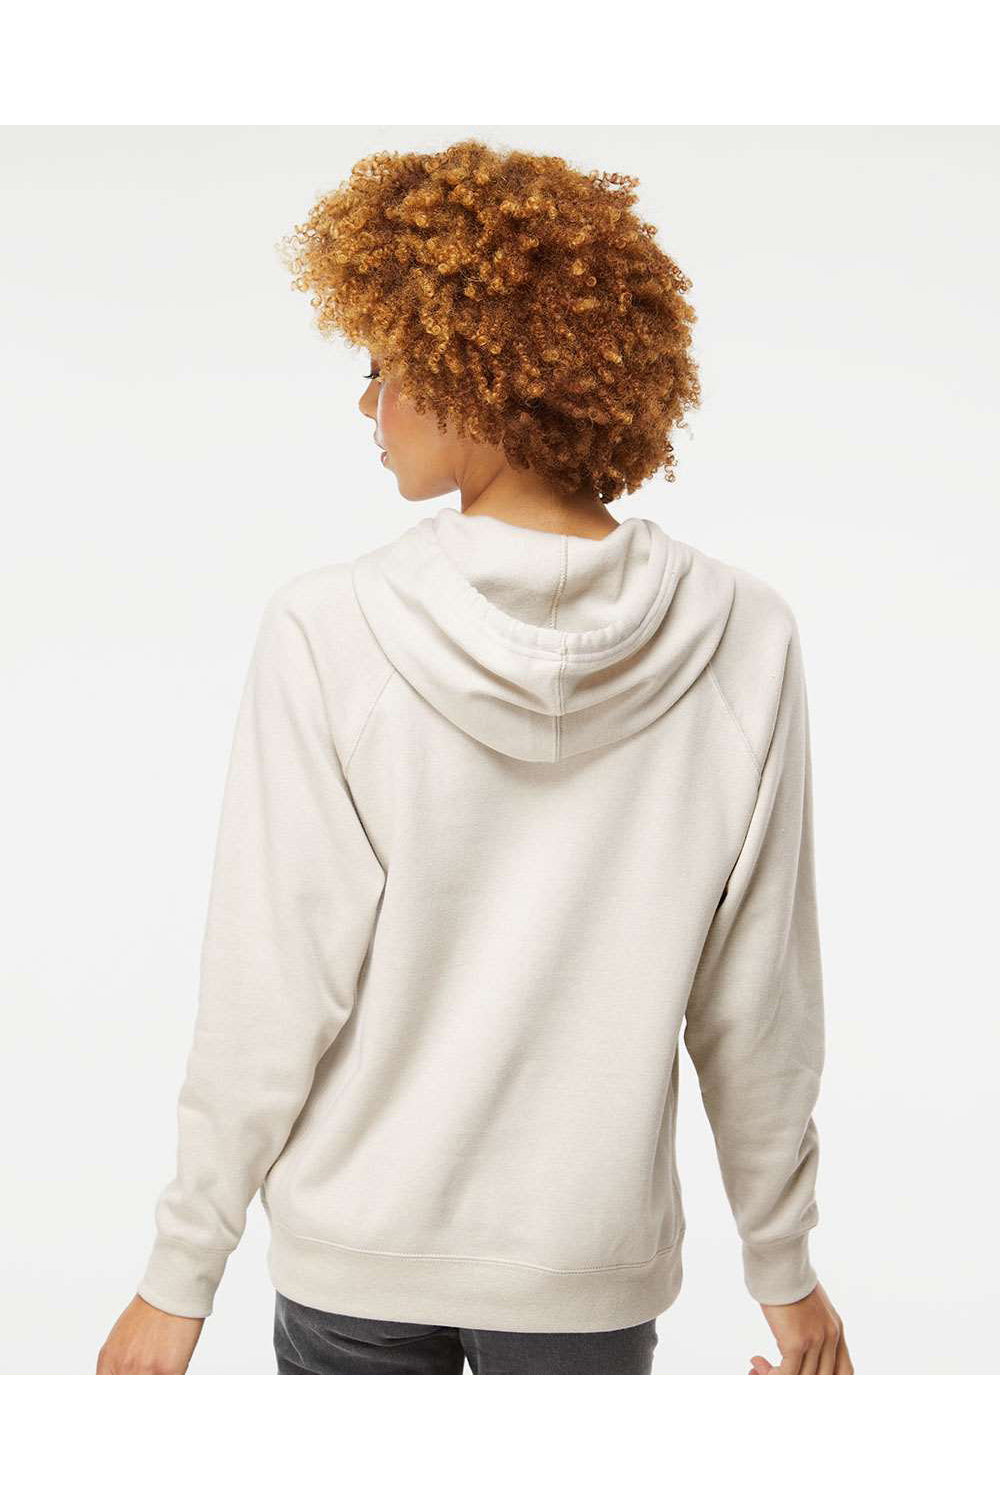 Independent Trading Co. PRM33SBP Mens Special Blend Raglan Hooded Sweatshirt Hoodie Heather Stone Model Back